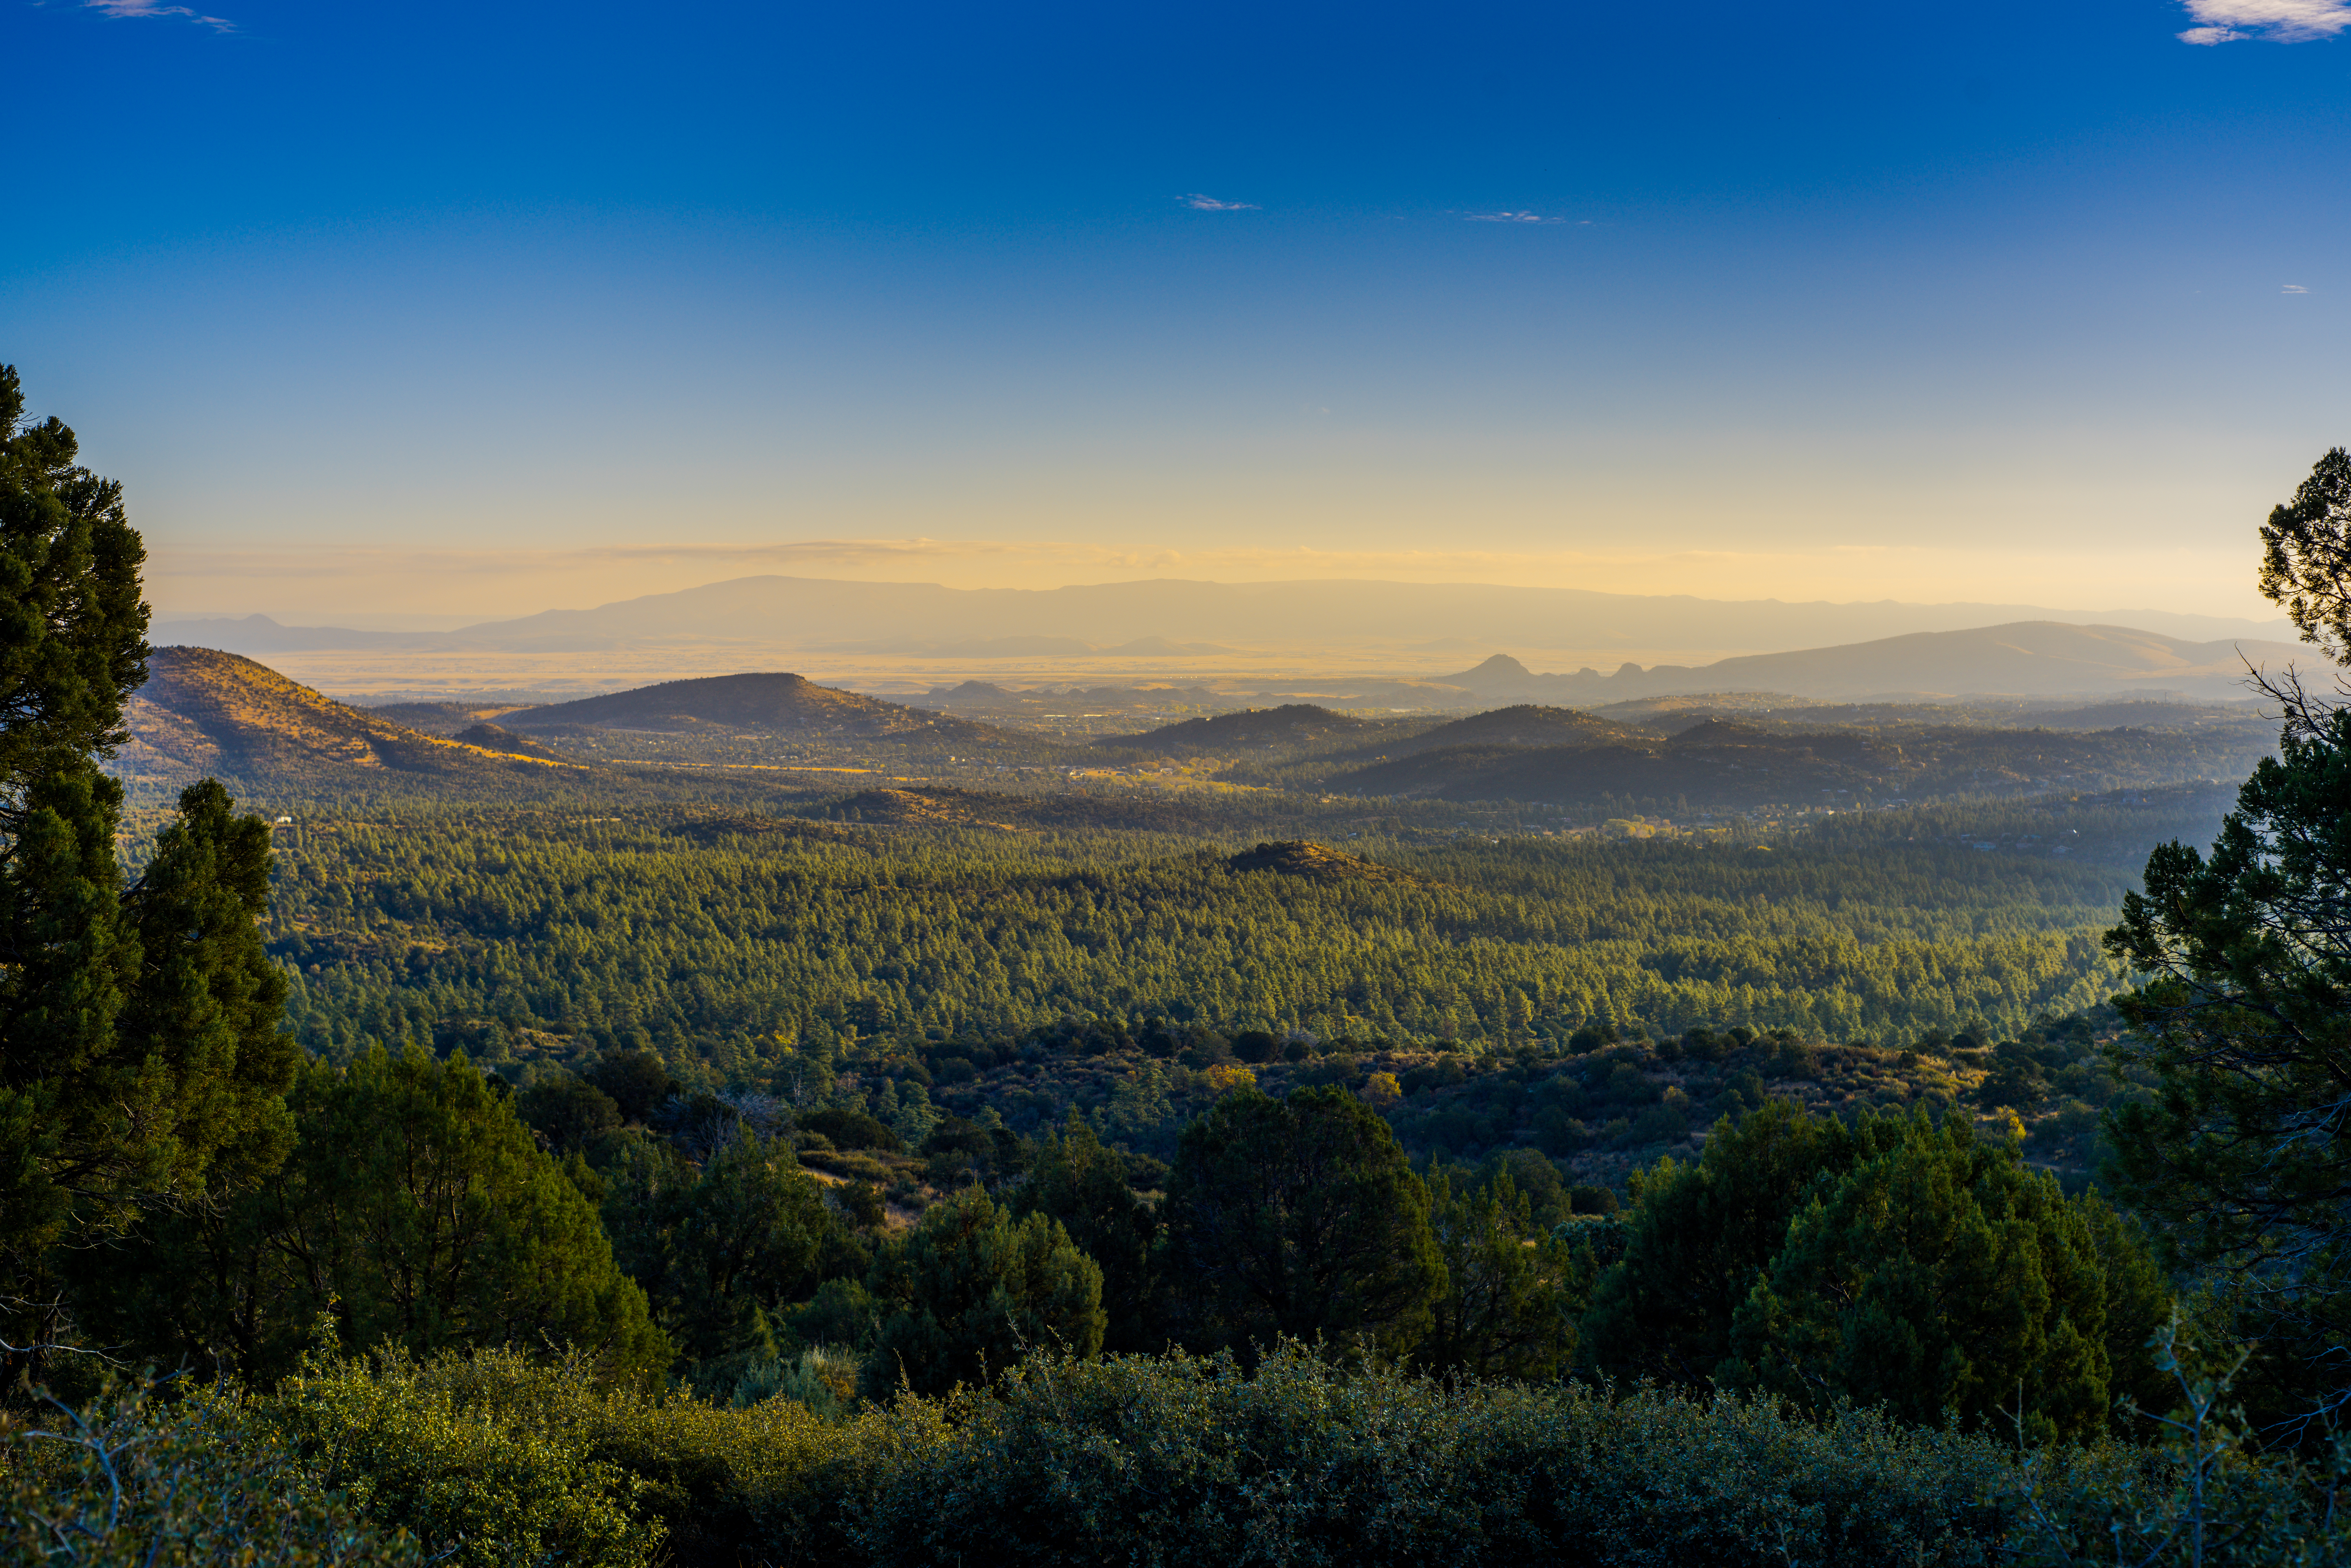 Beautiful landcape photograph of the forests and mountains surrounding Prescott, Arizona.